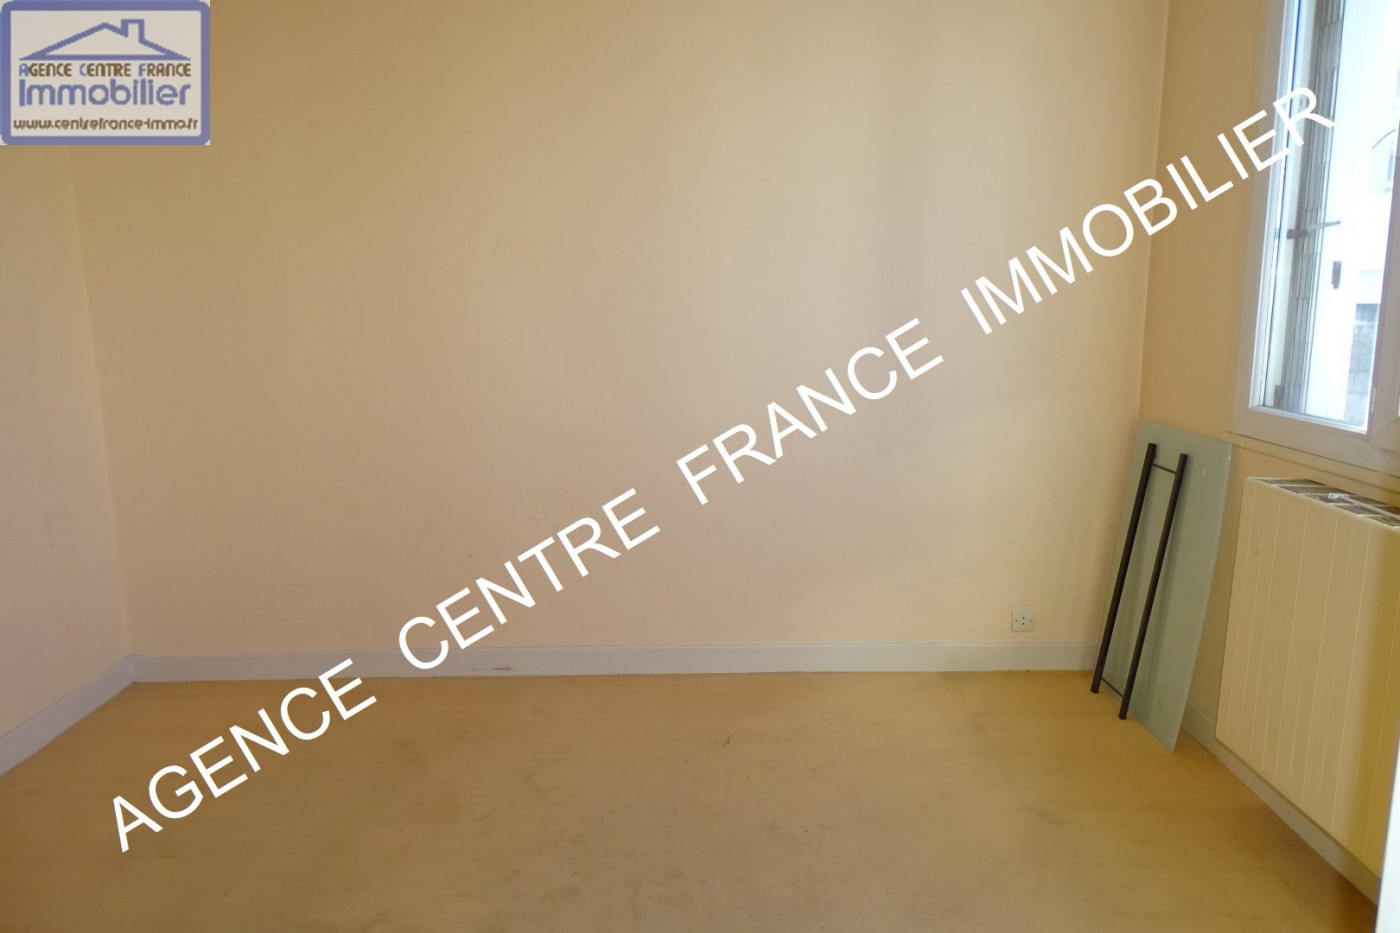 A vendre  Bourges | Réf 030011490 - Agence centre france immobilier